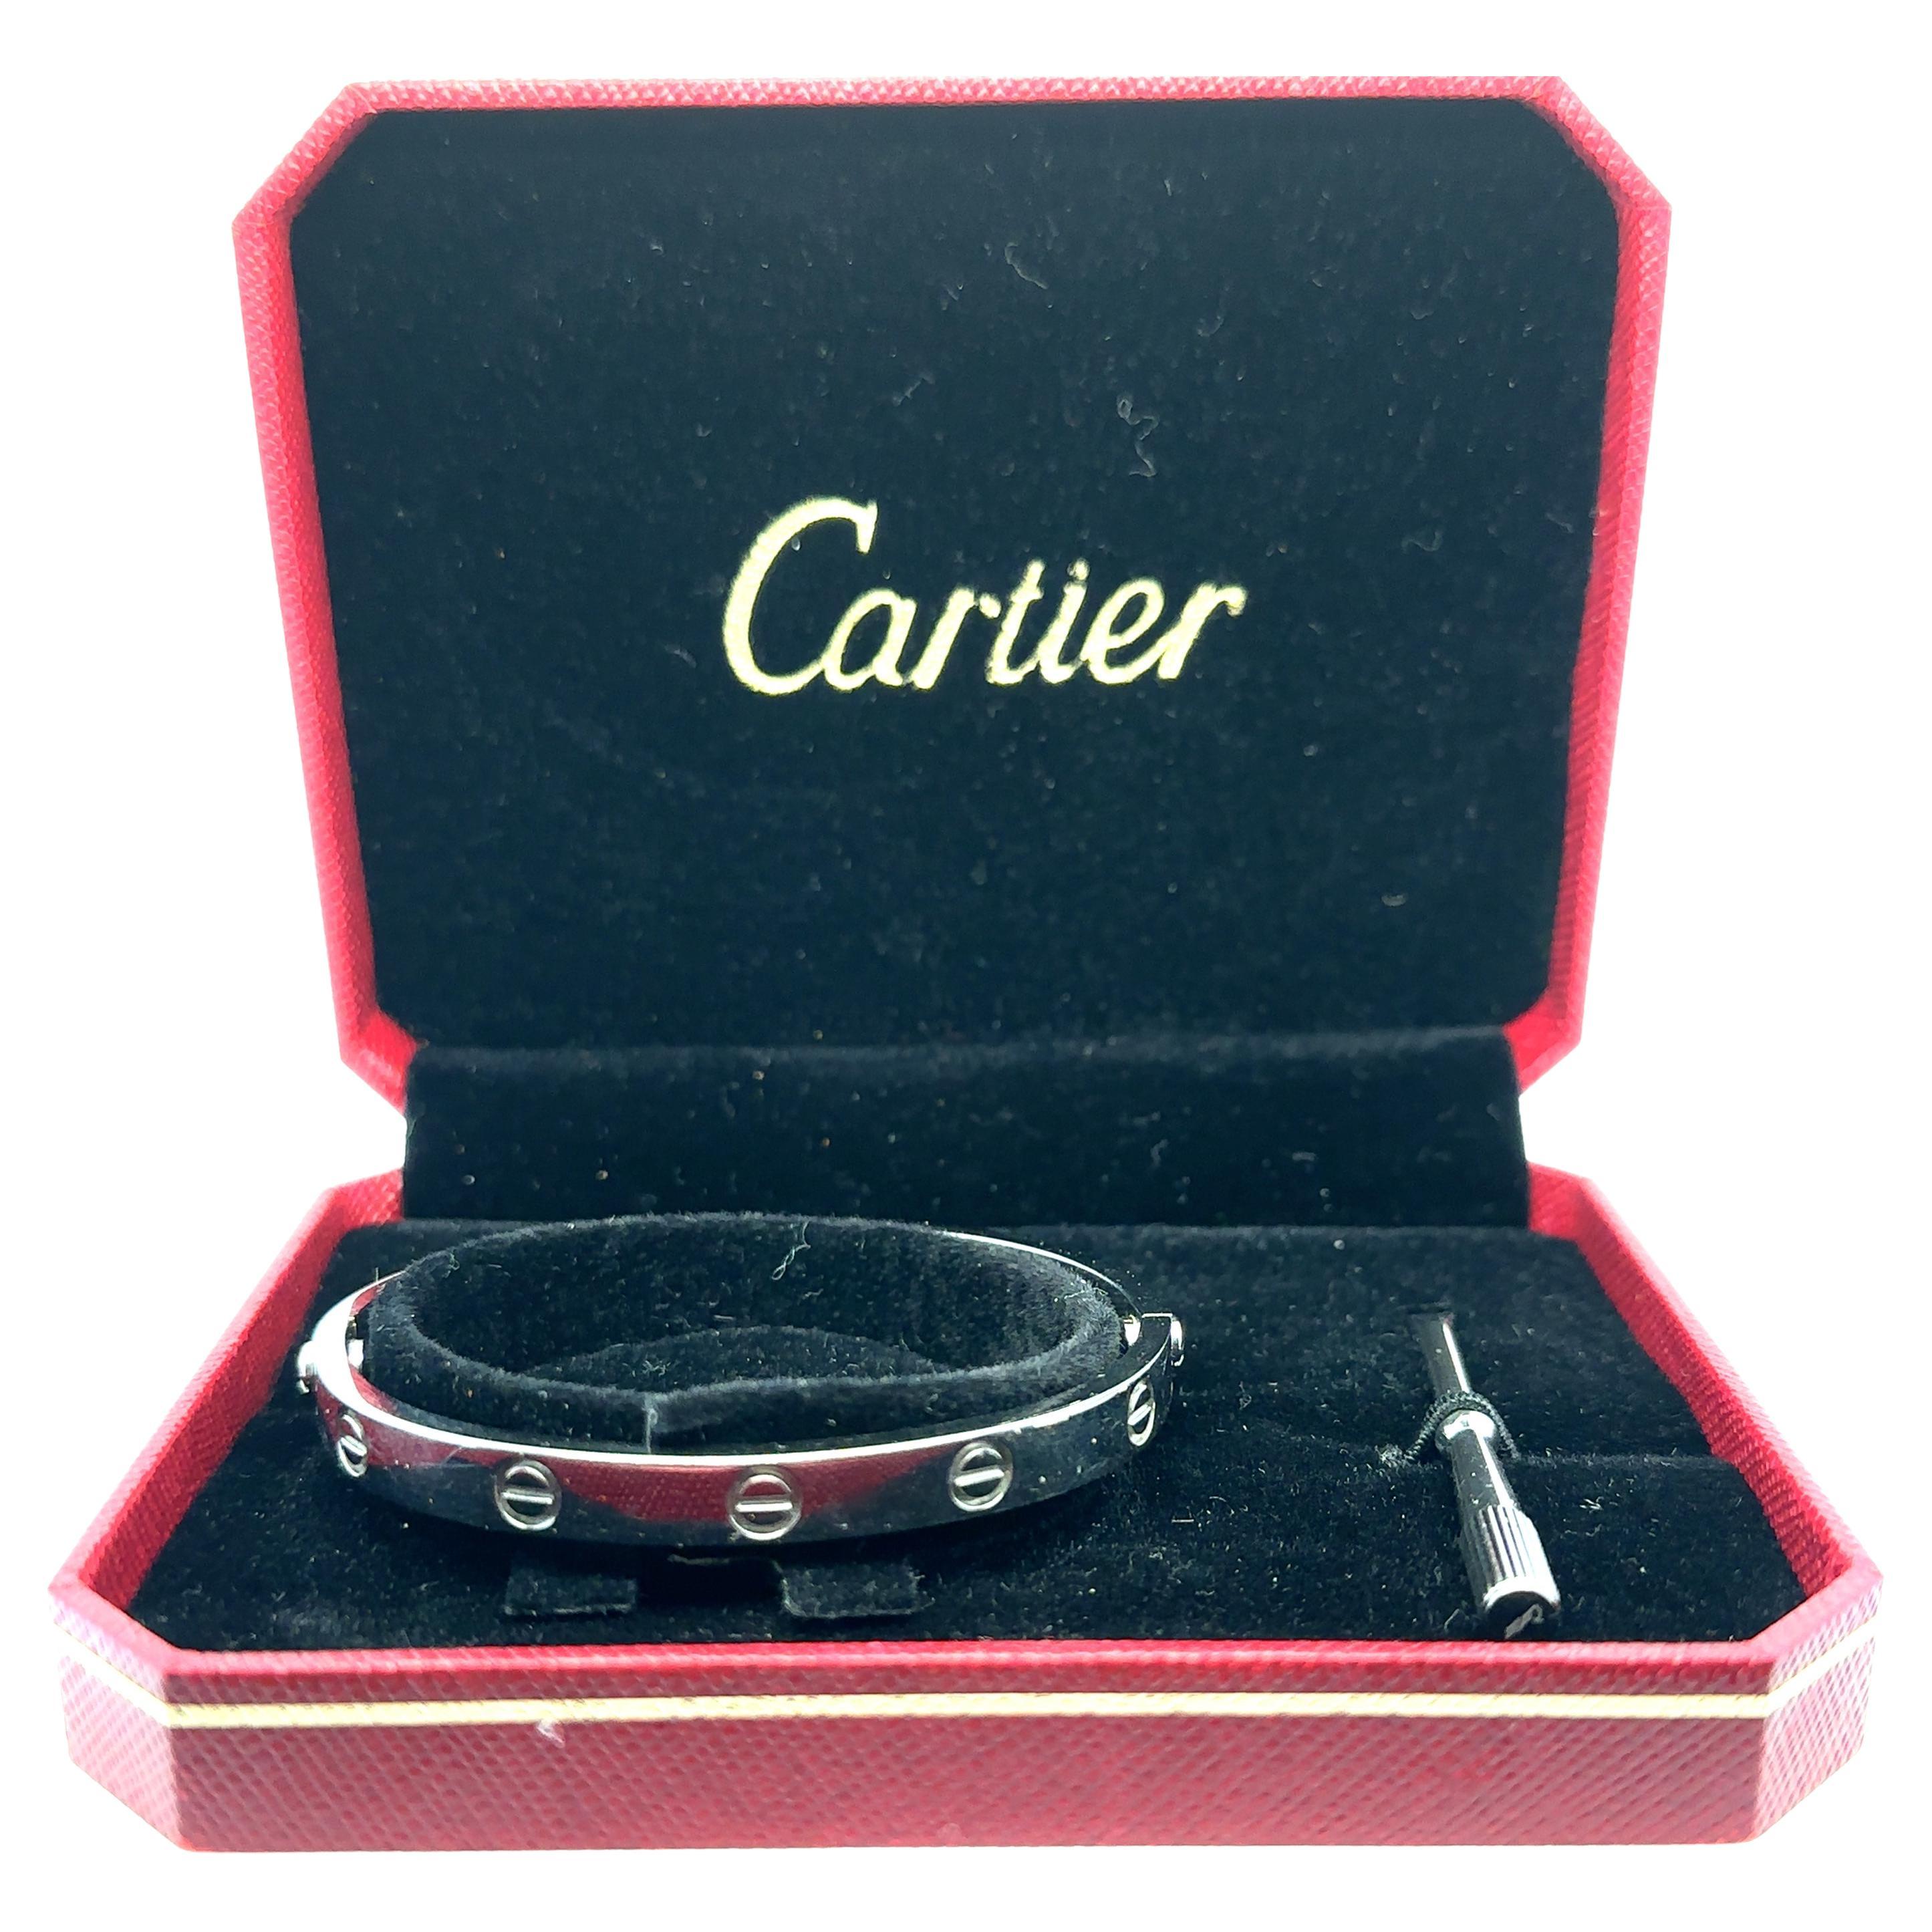 18k White Gold Cartier Love Bracelet with Box